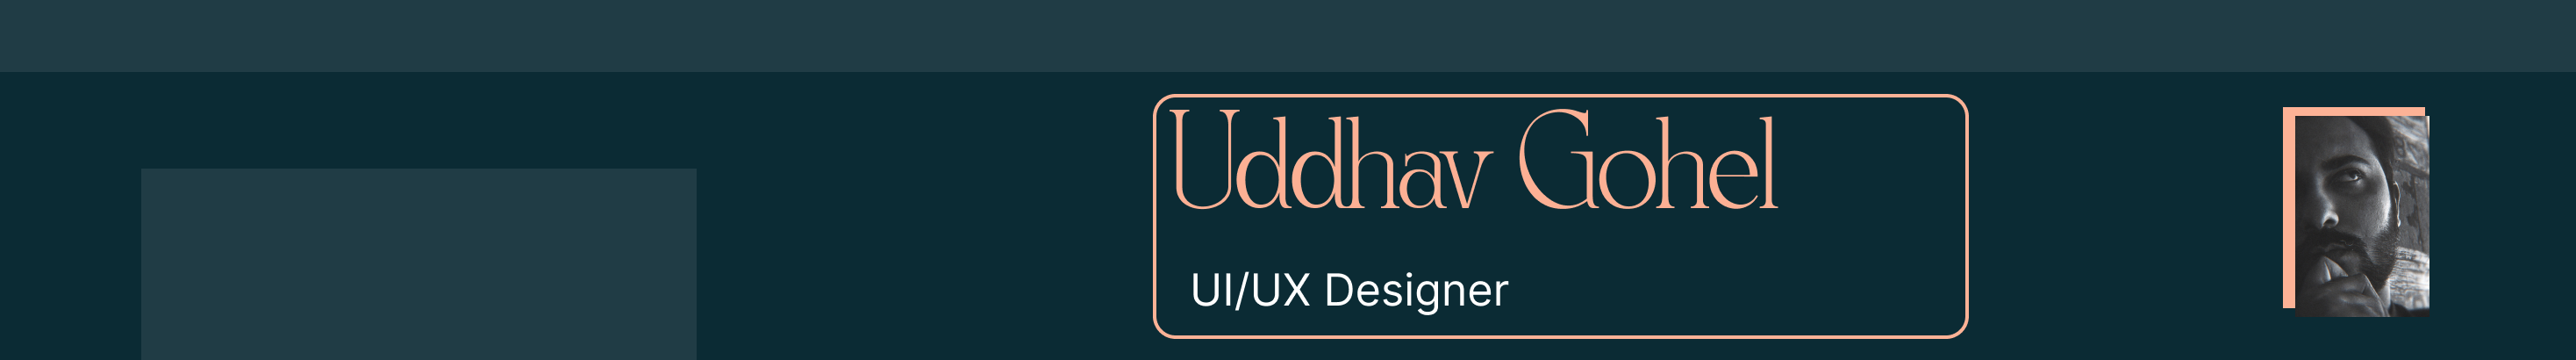 Uddhav Gohel's profile banner